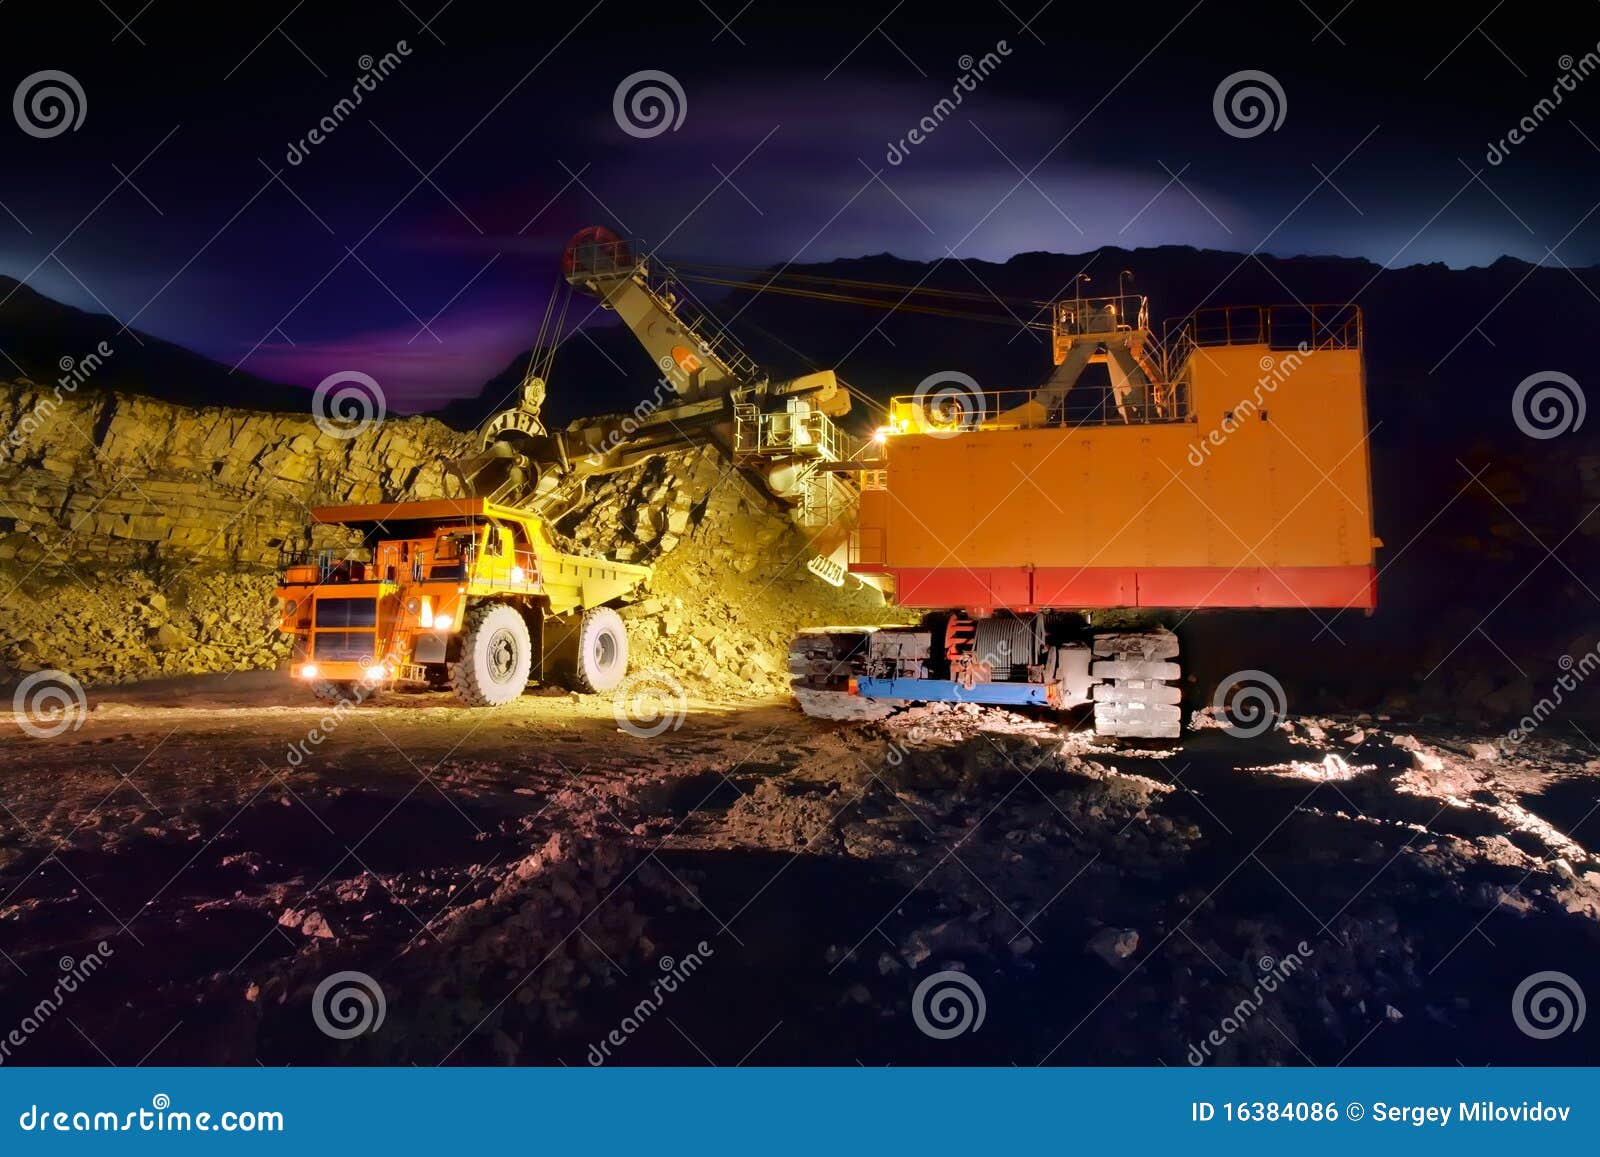 big yellow mining truck